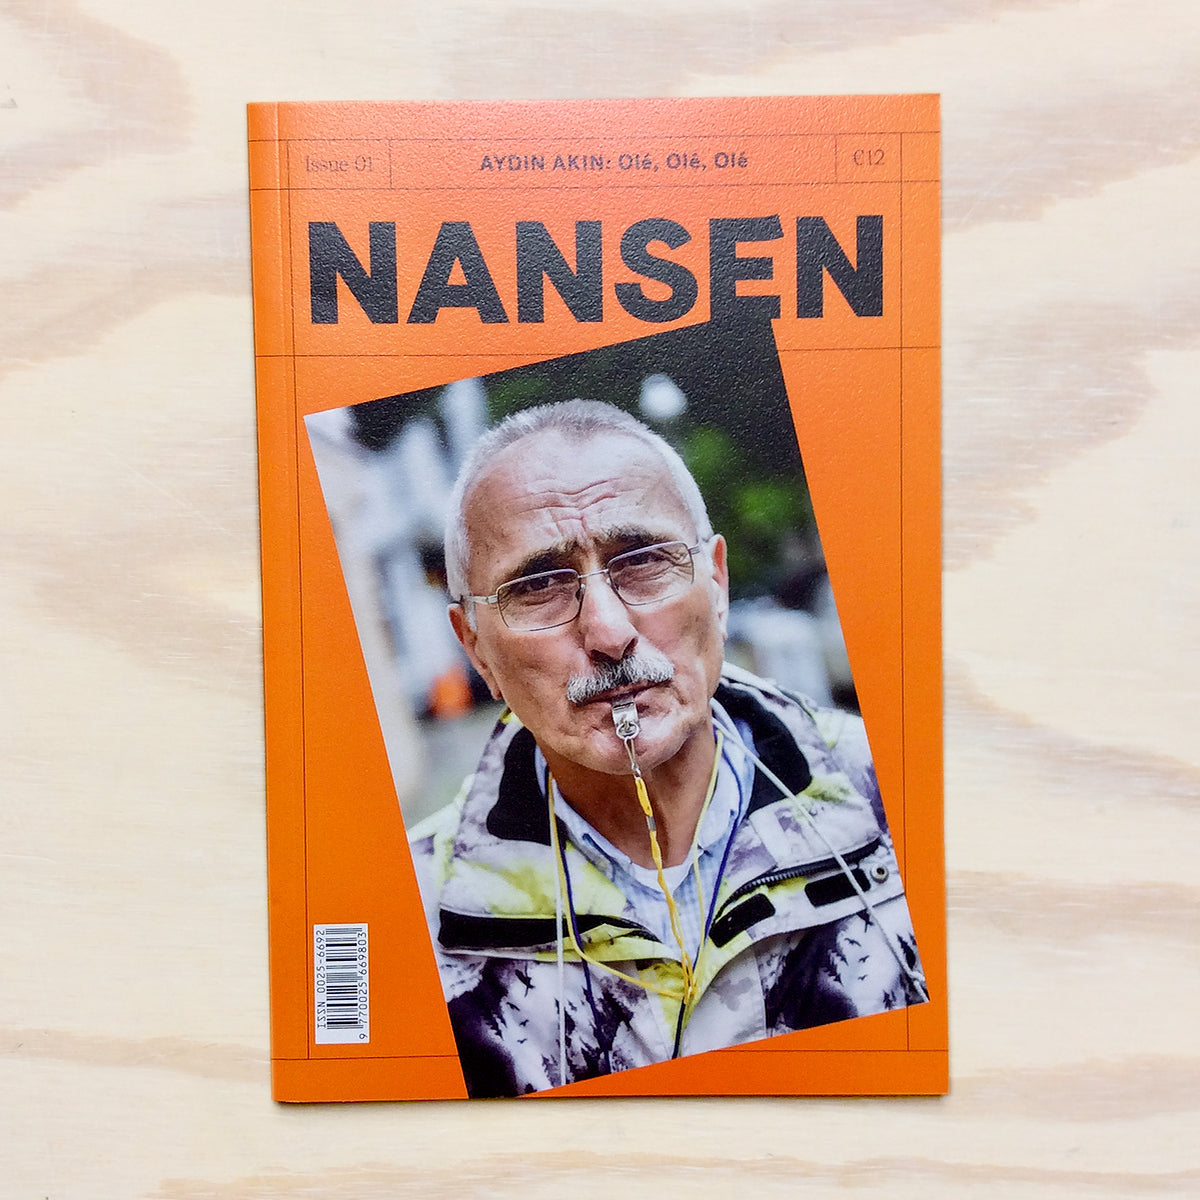 Nansen #01 - Aydin Akin - OUT OF PRINT